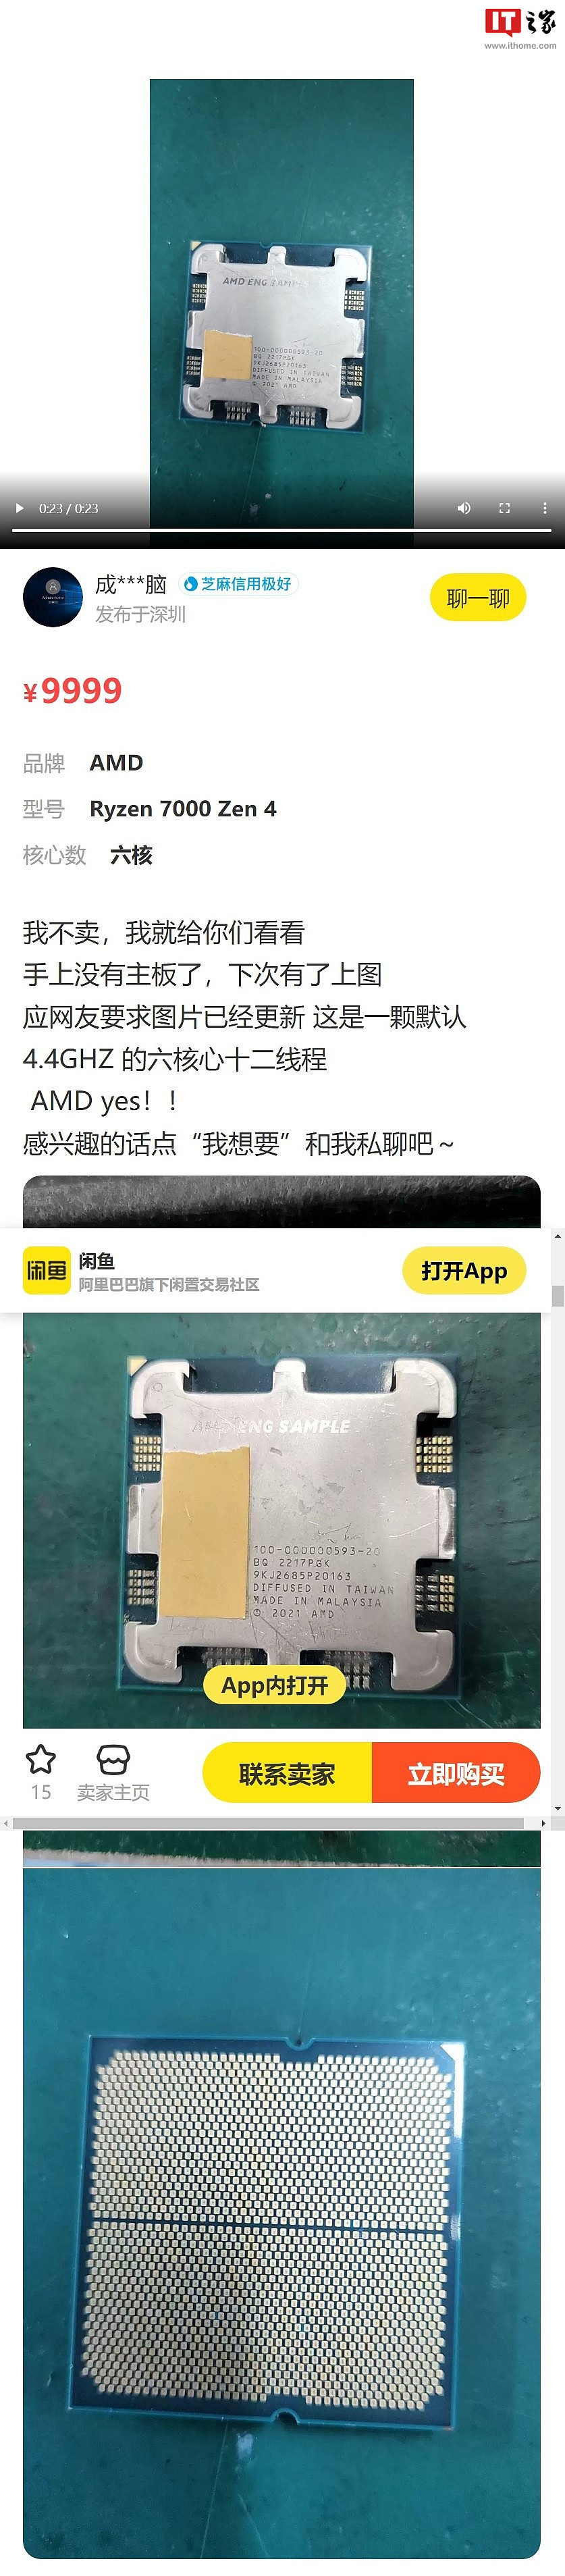 AMD R5 7600X 处理器工程样品现身闲鱼：号称默认 4.4GHz，六核十二线程 - 1